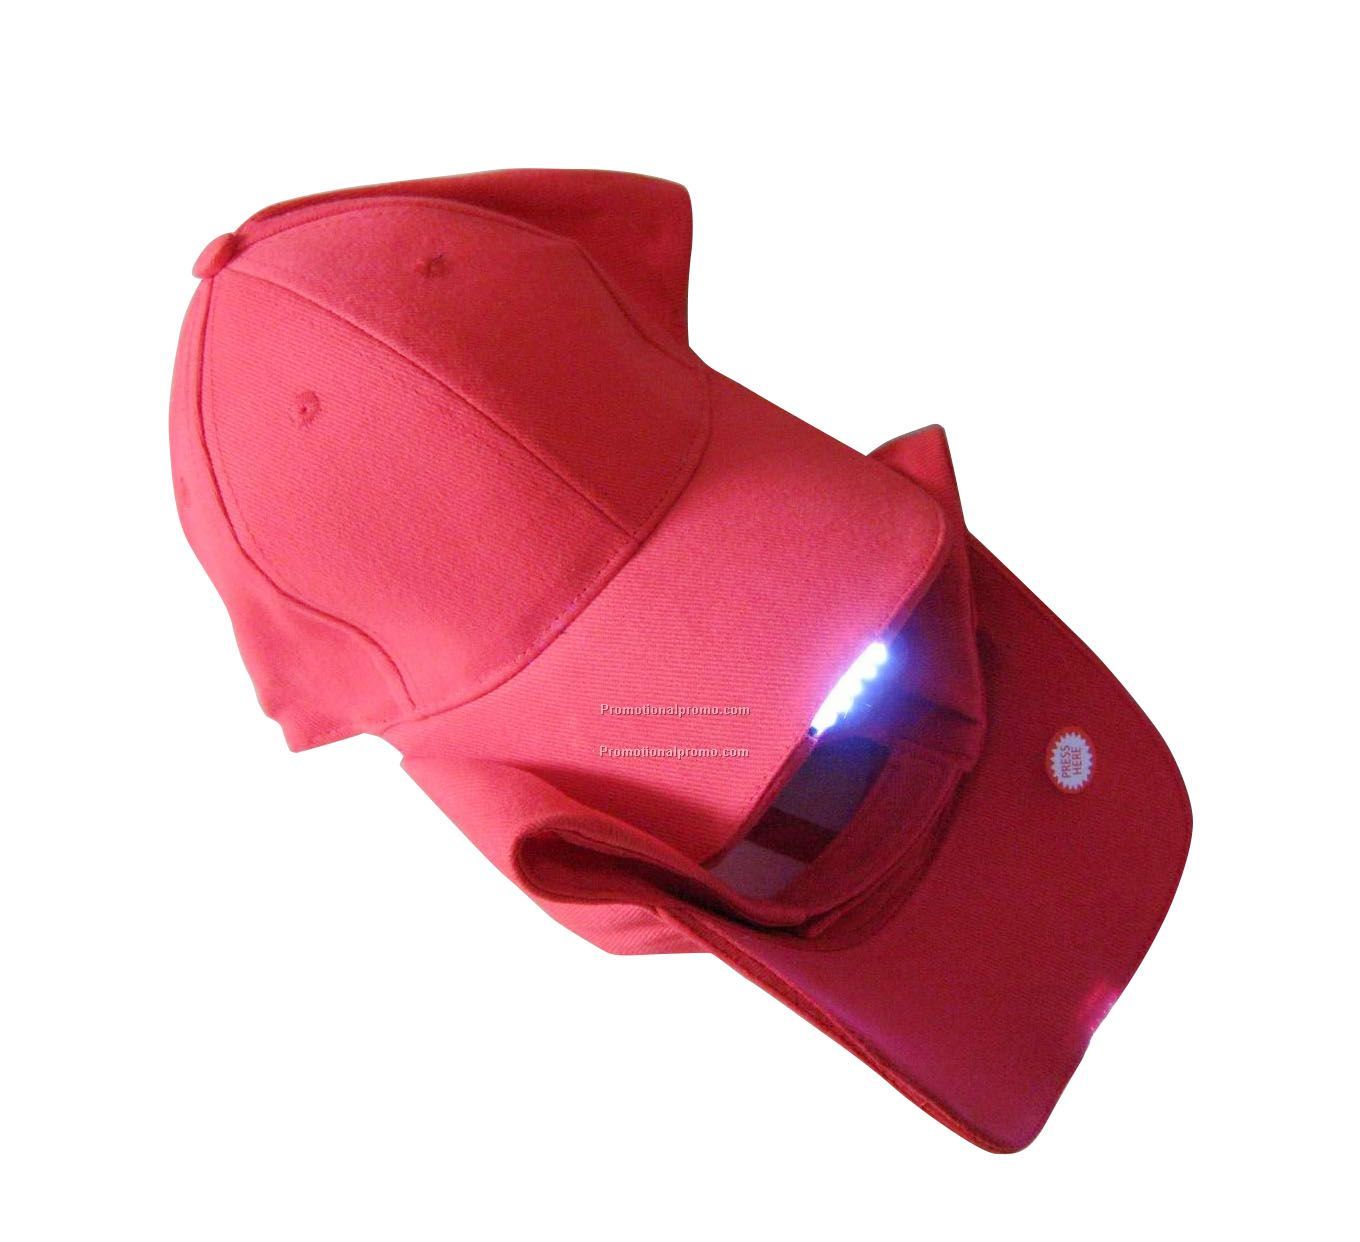 Flashing led light cap